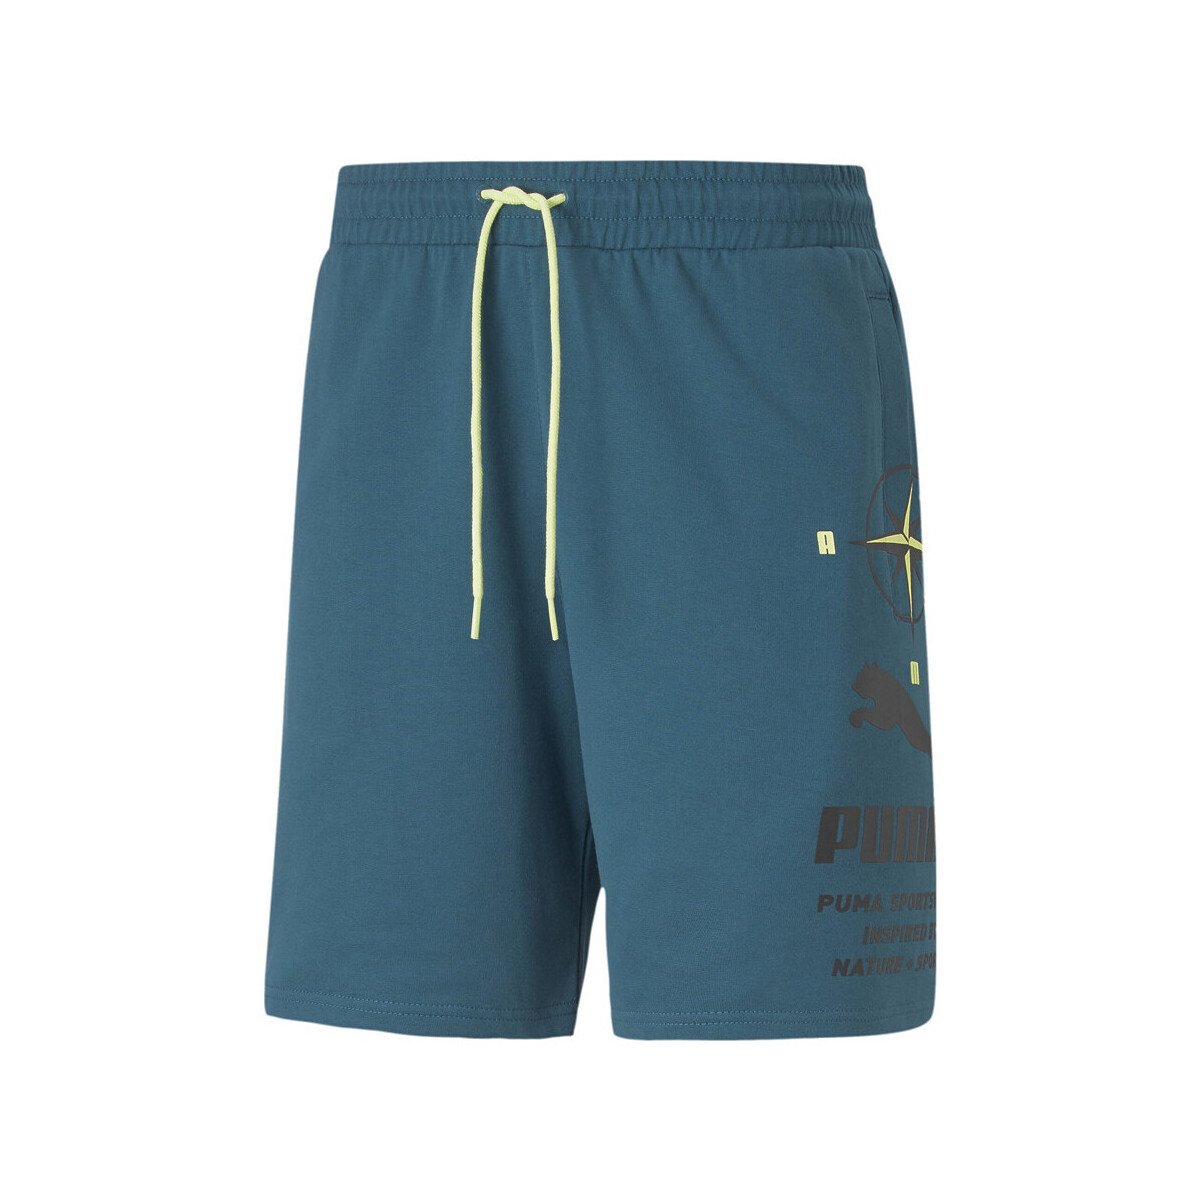 Abbigliamento Uomo Shorts / Bermuda Puma 536819-44 Blu